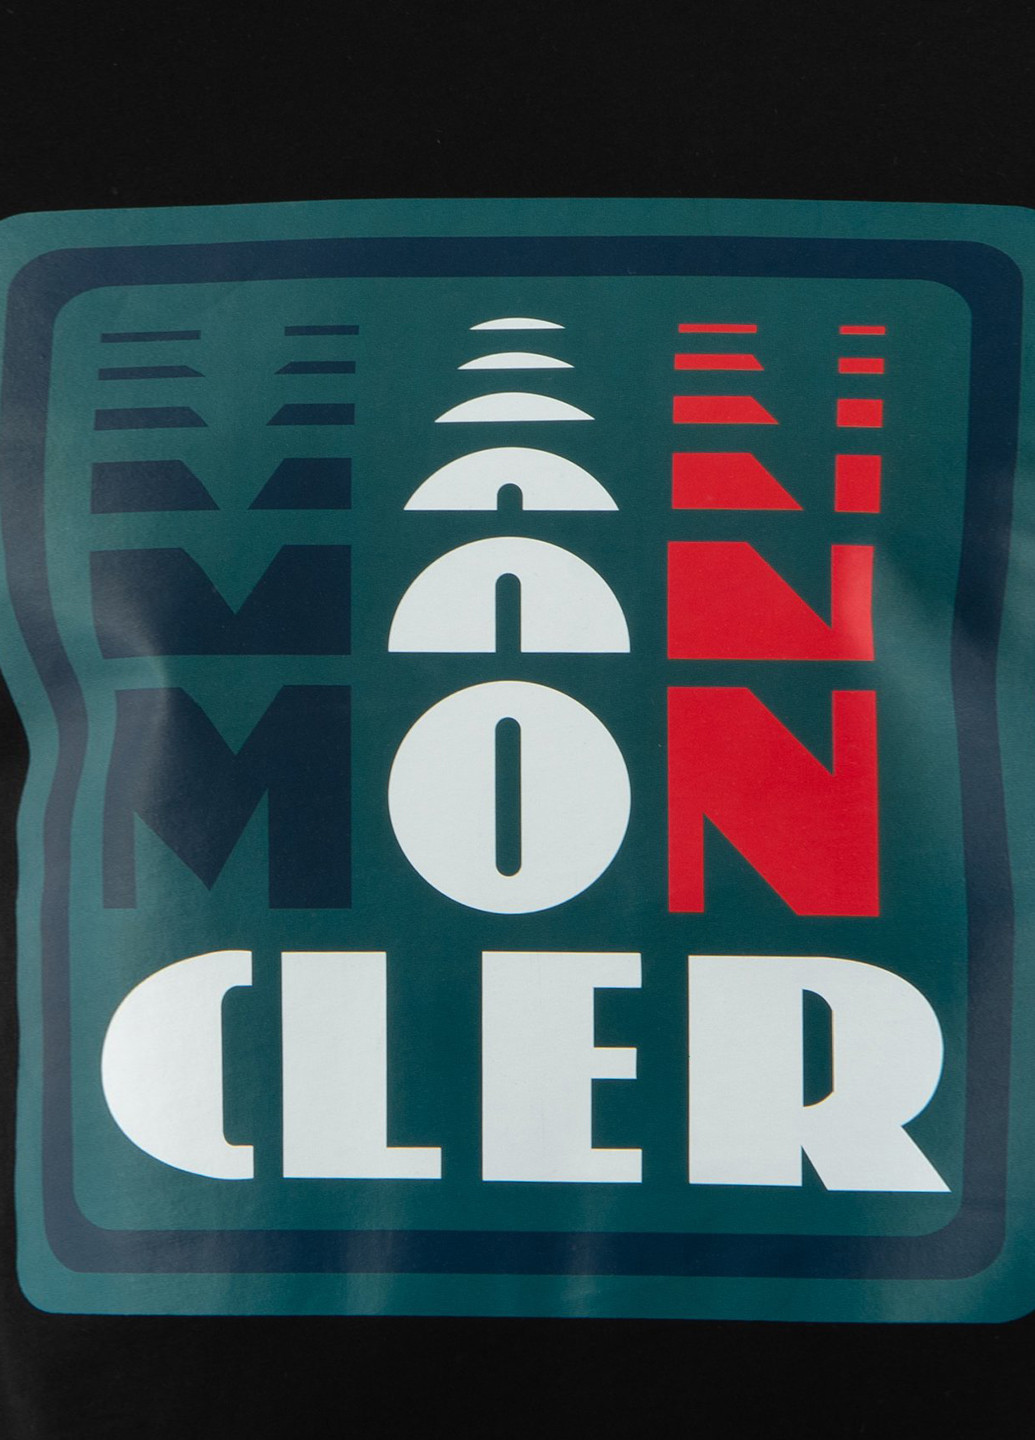 Черная футболка Moncler